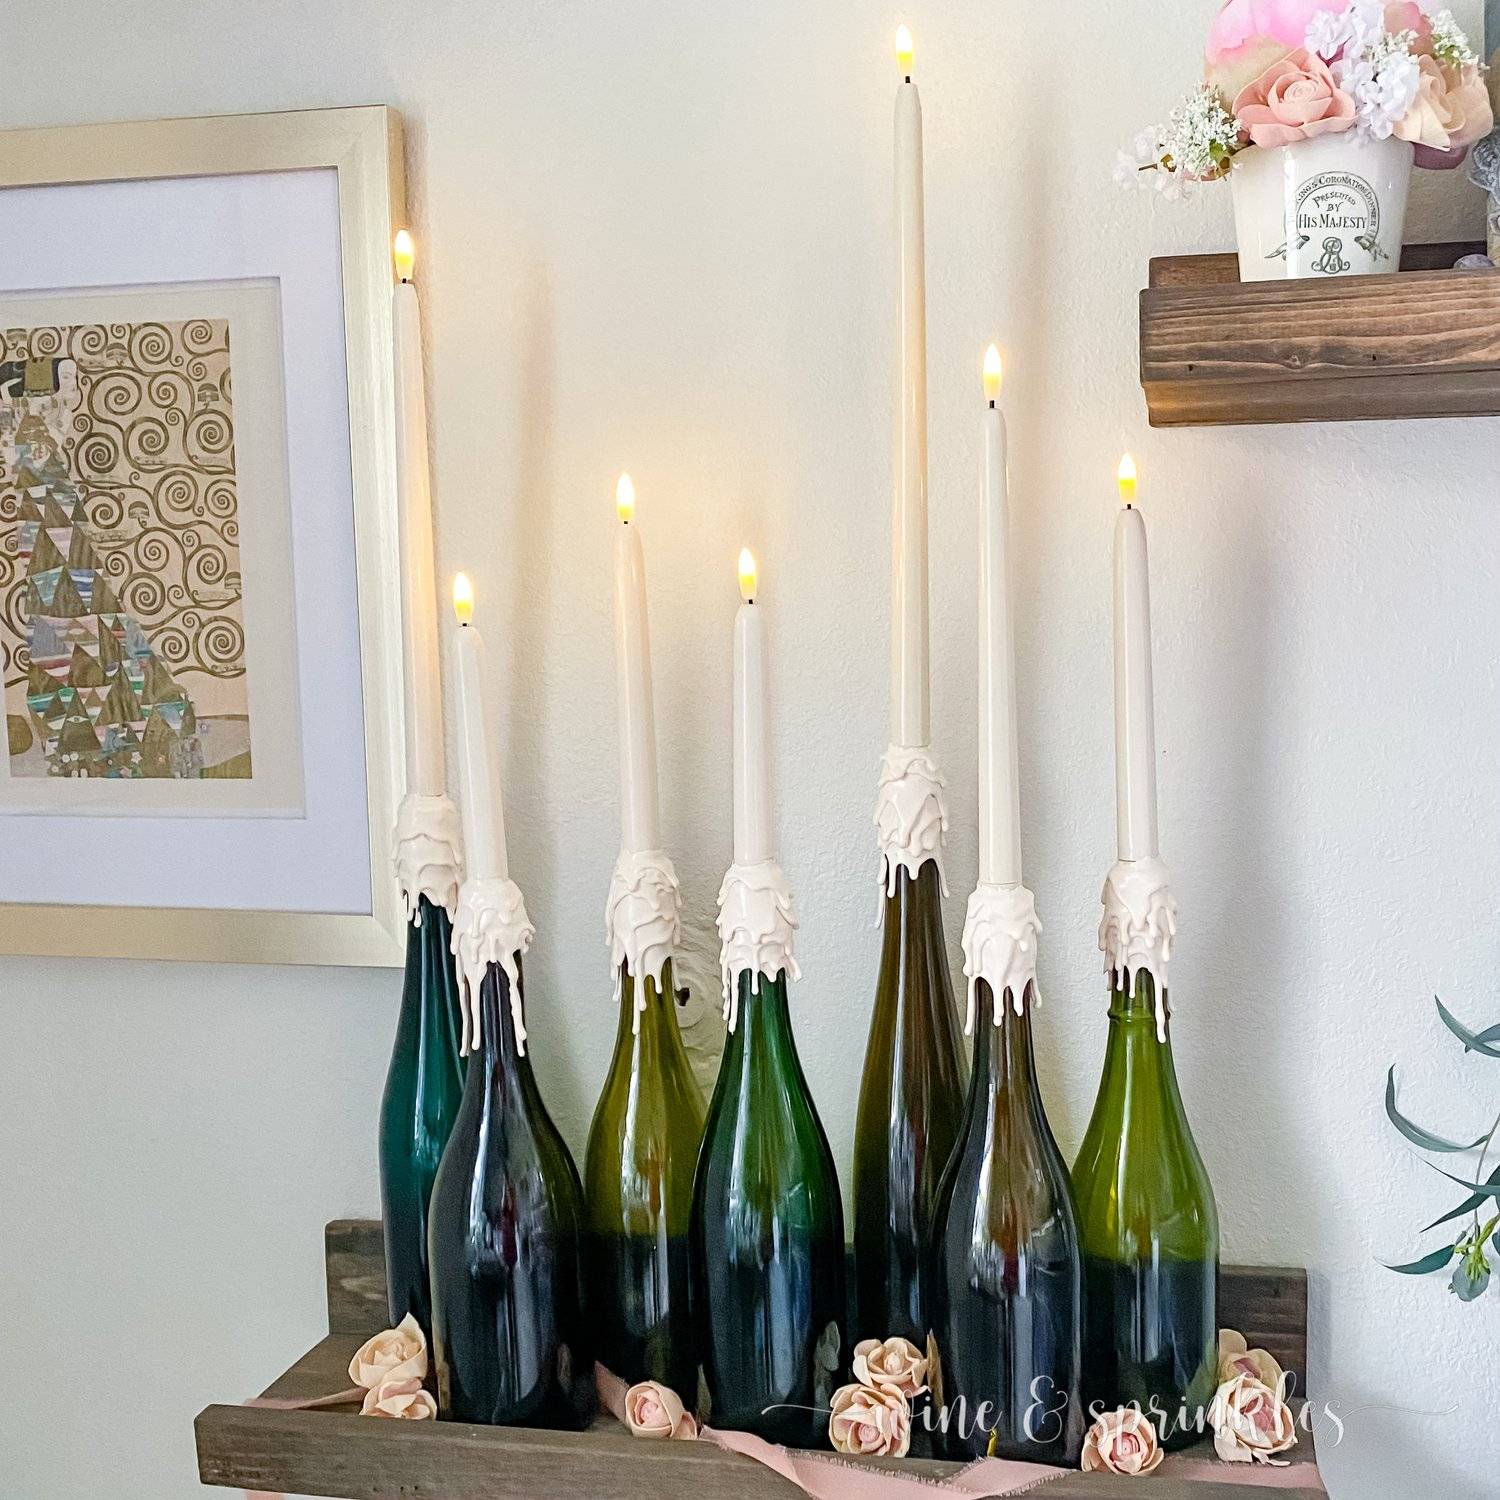 wine bottles turned into candlesticks